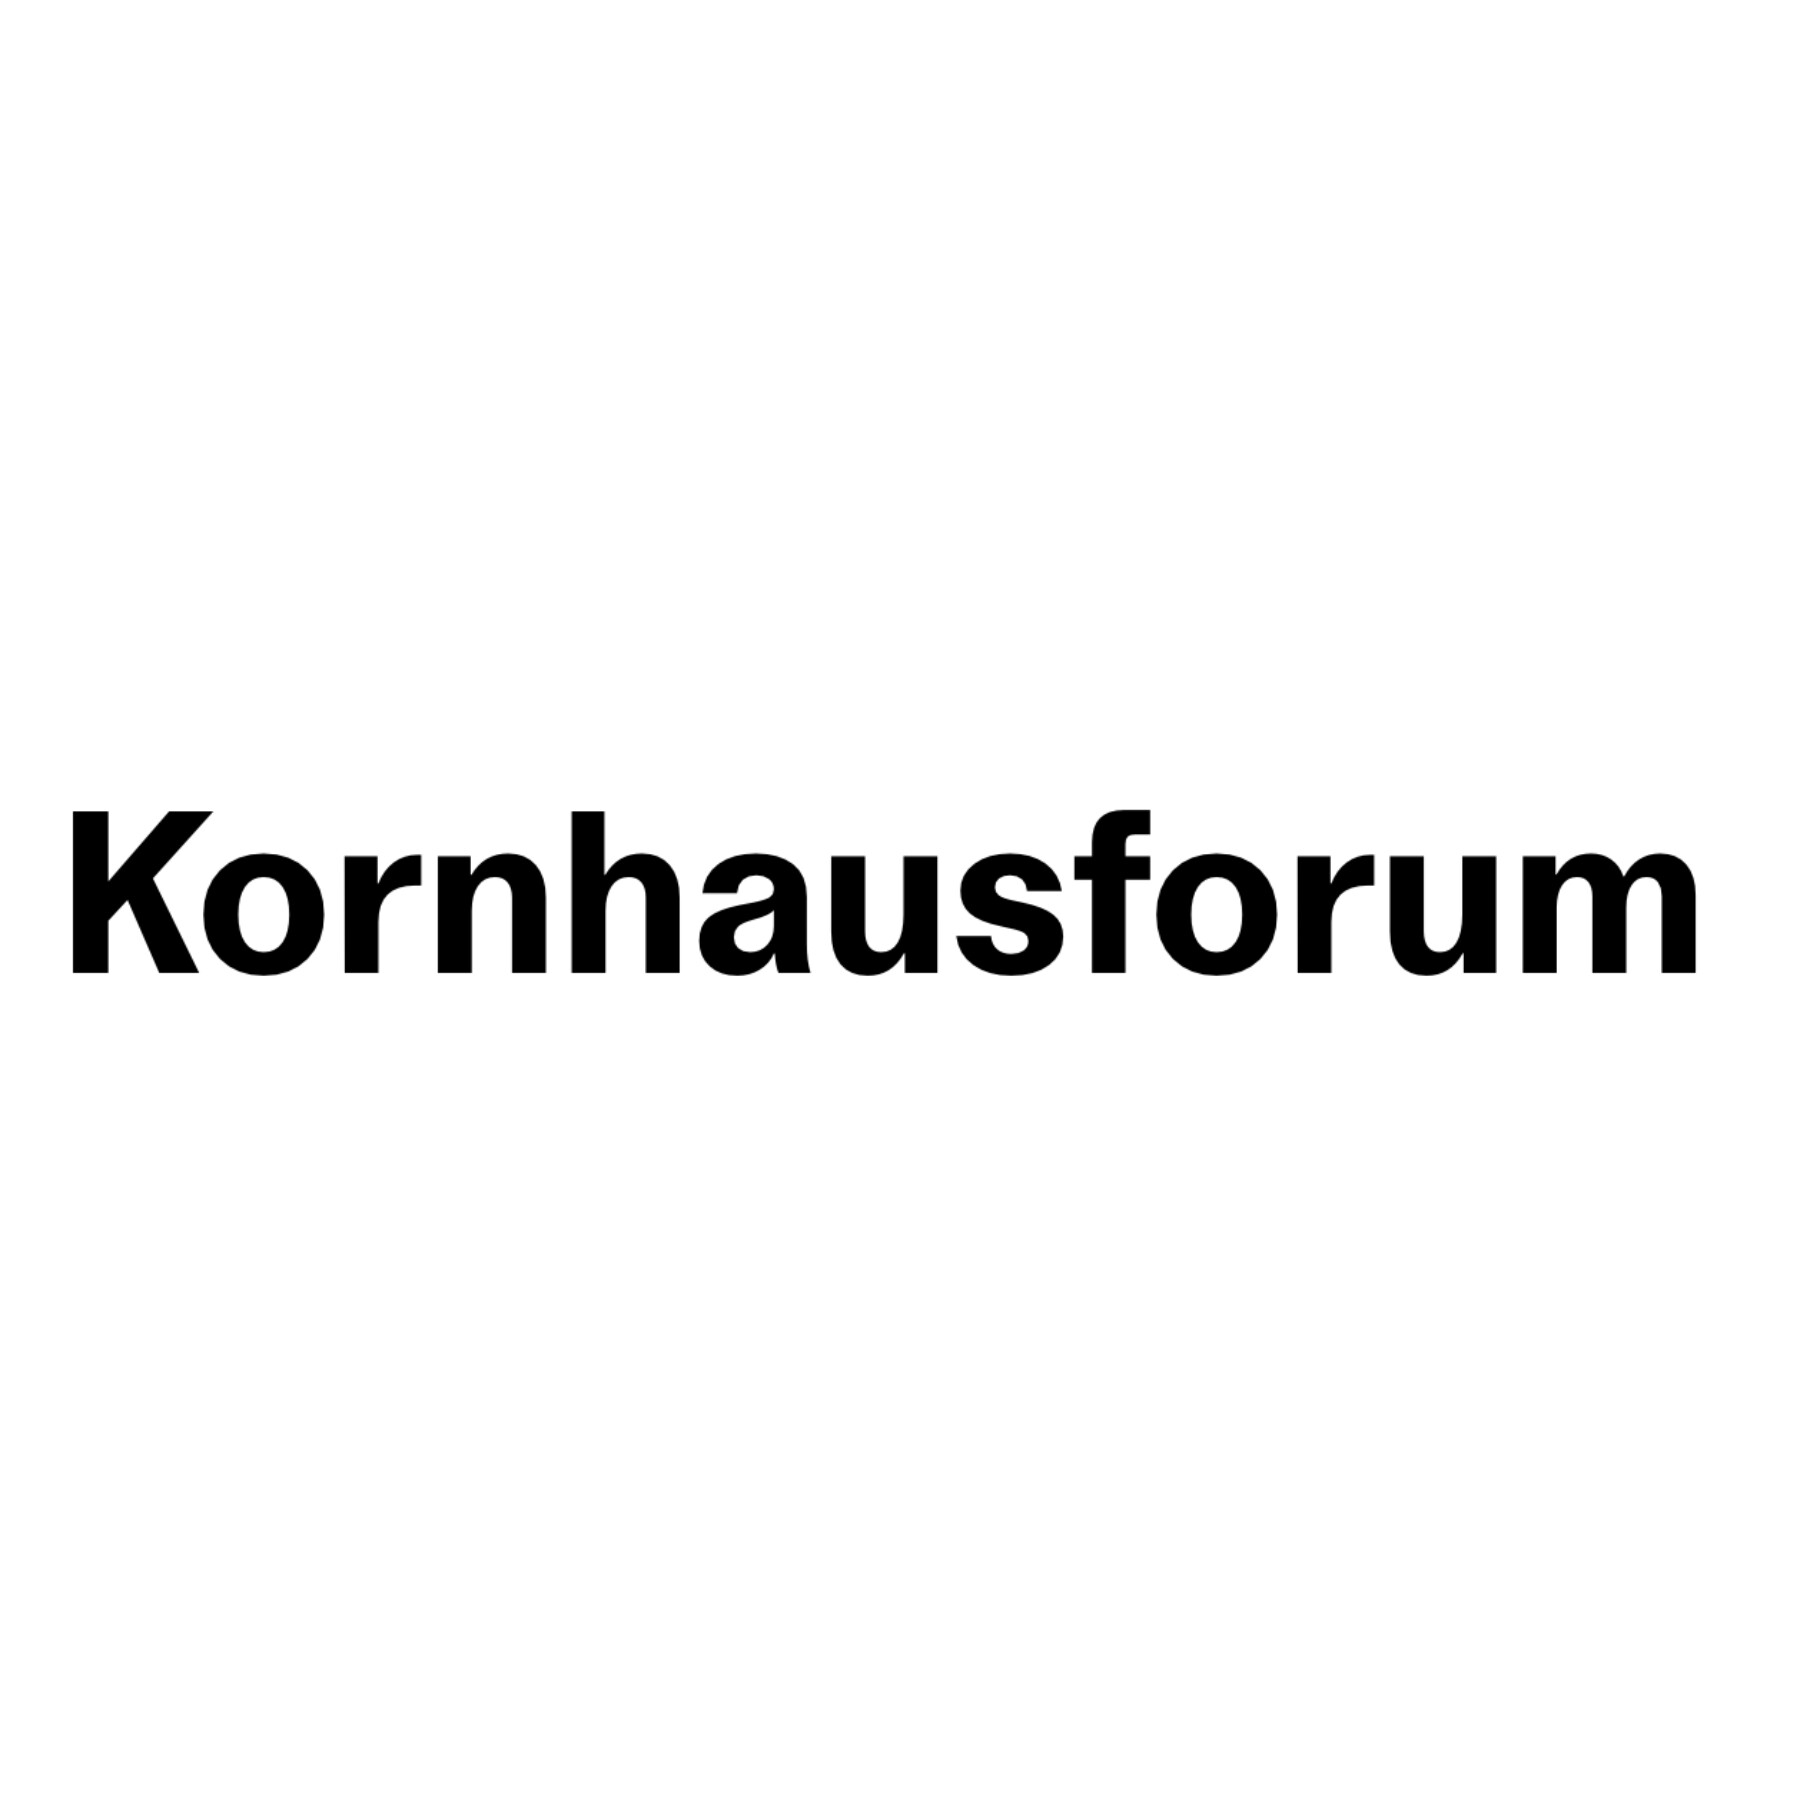 Kornhausforum